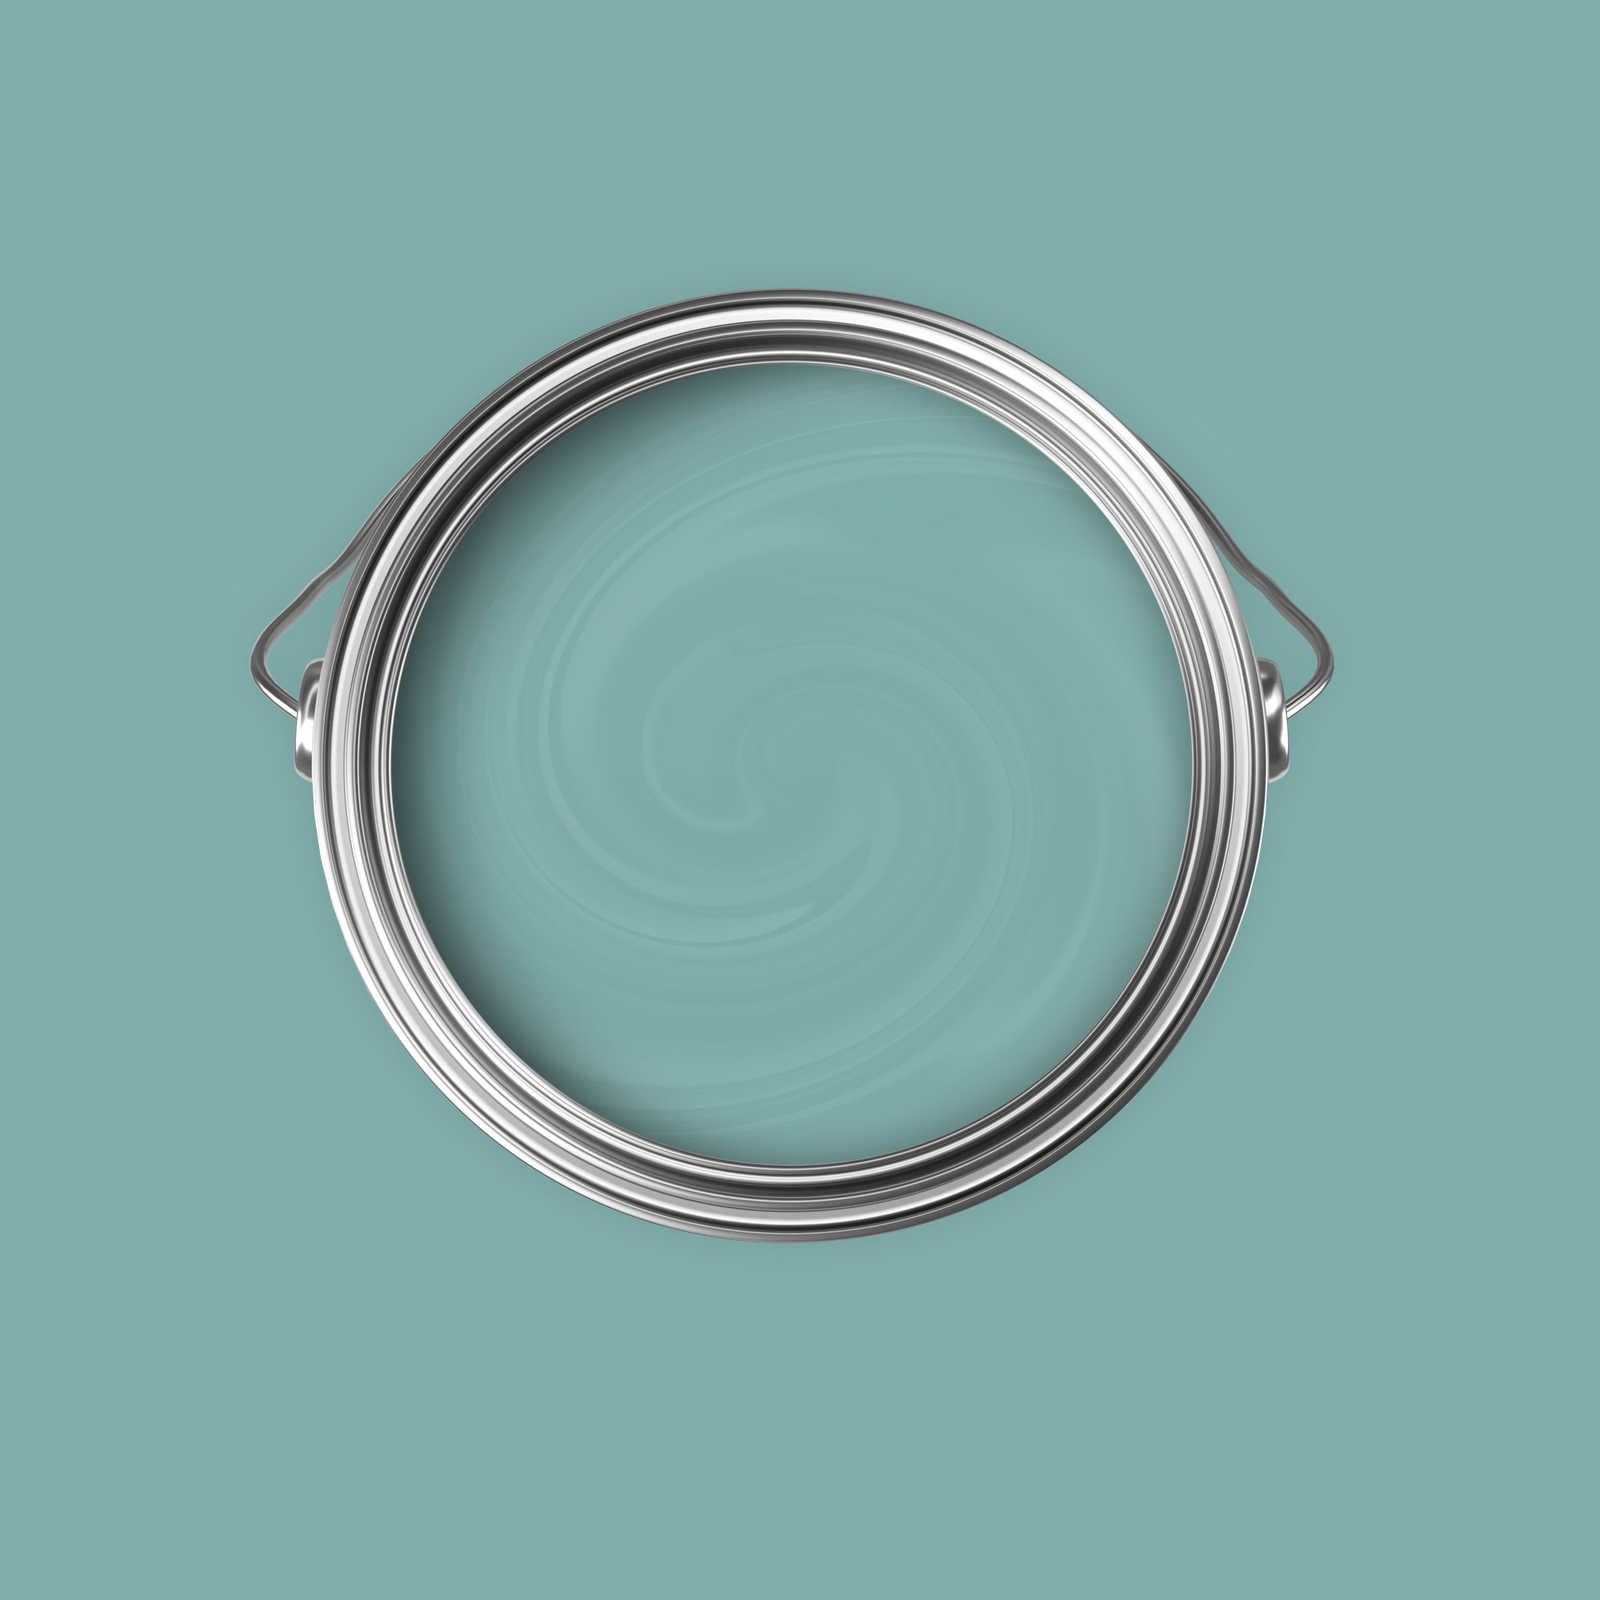             Premium Wandfarbe beflügelndes Mint »Expressive Emerald« NW408 – 5 Liter
        